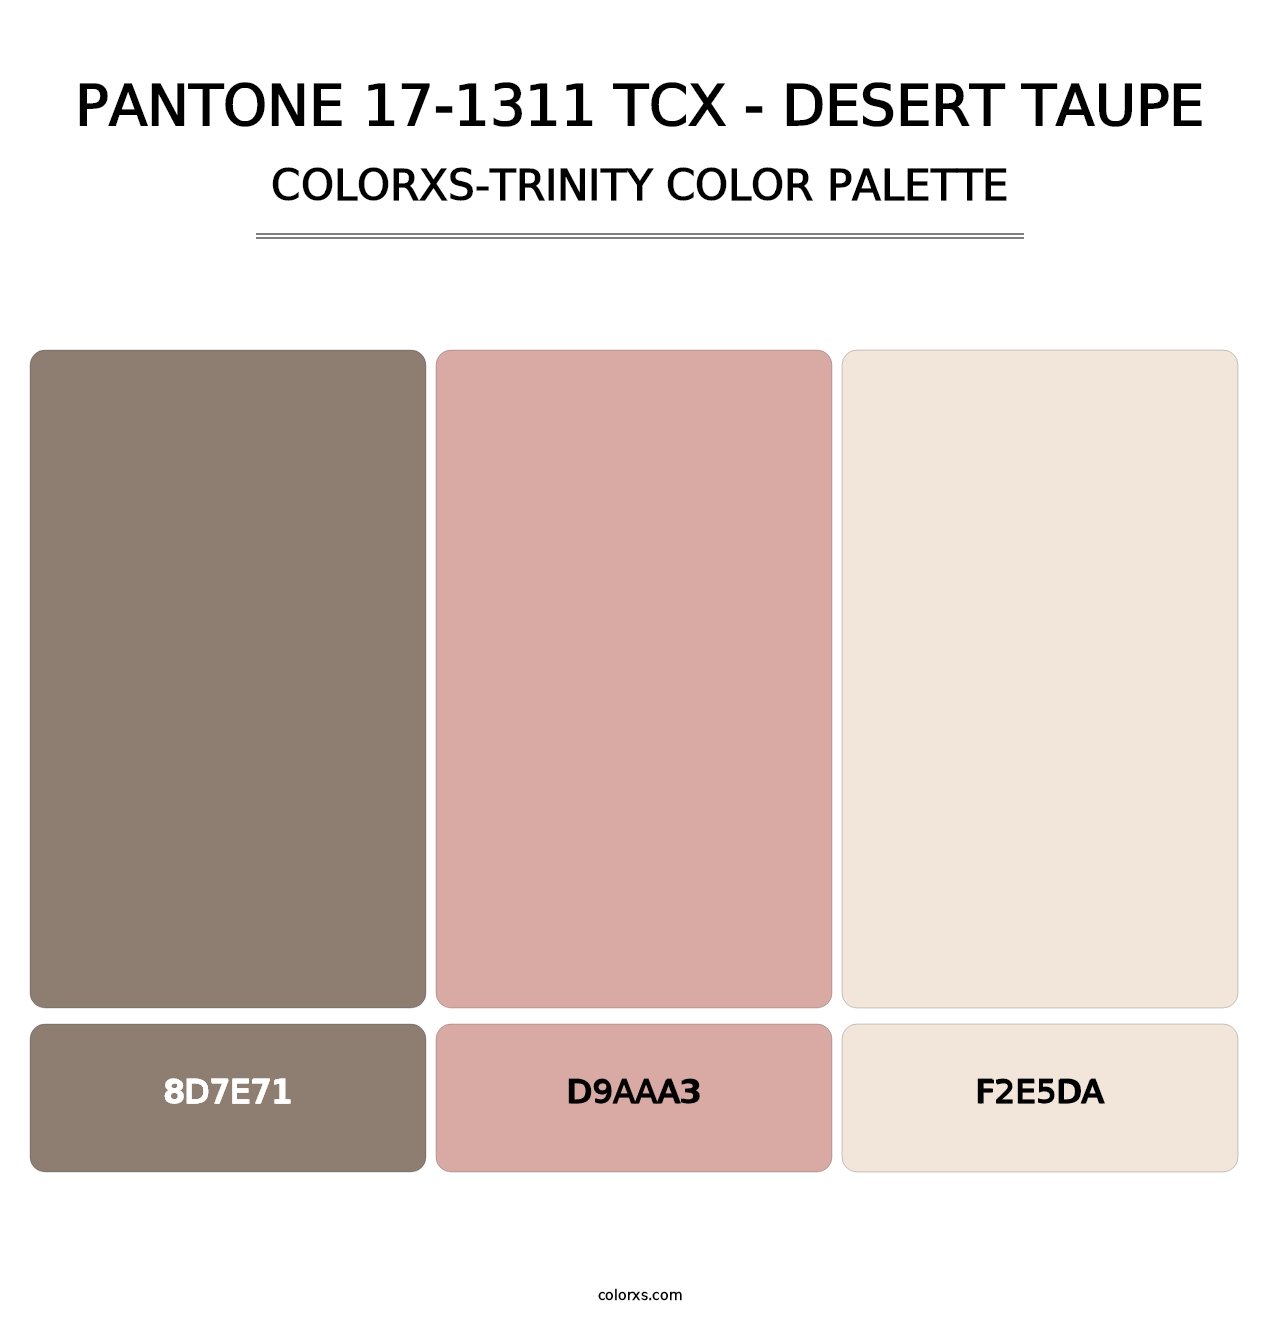 PANTONE 17-1311 TCX - Desert Taupe - Colorxs Trinity Palette